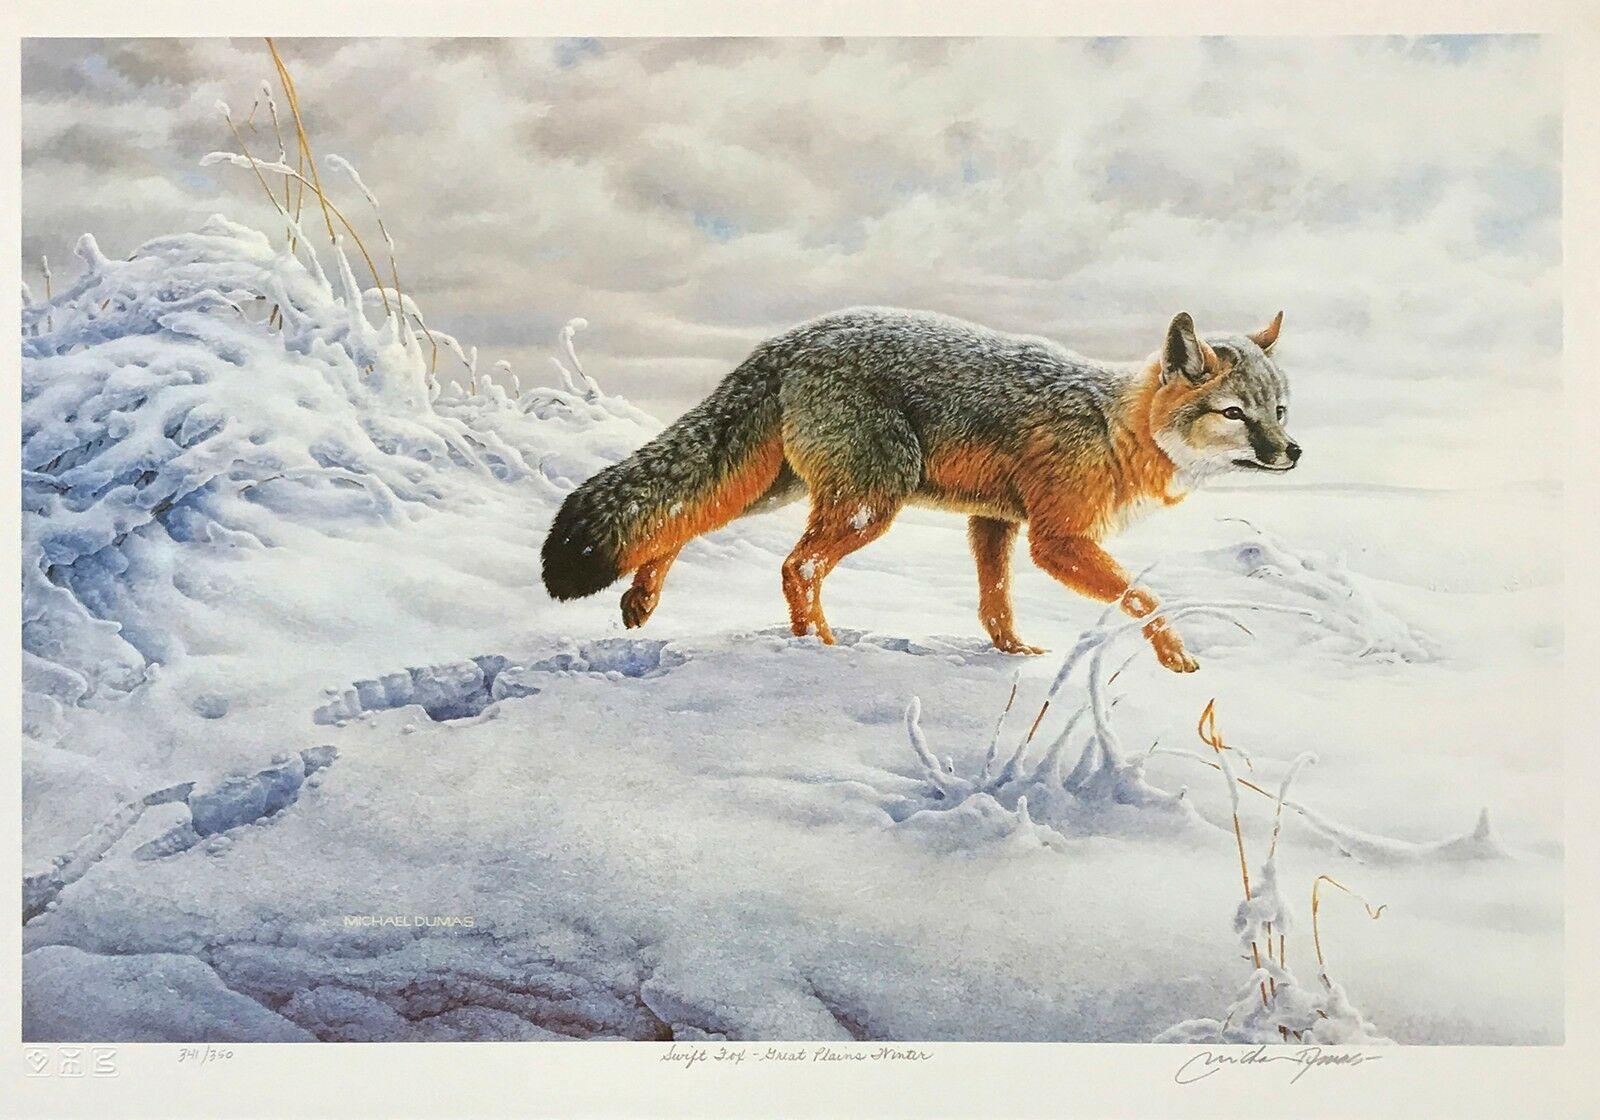 SWIFT FOX - GREAT PLAINS WINTER